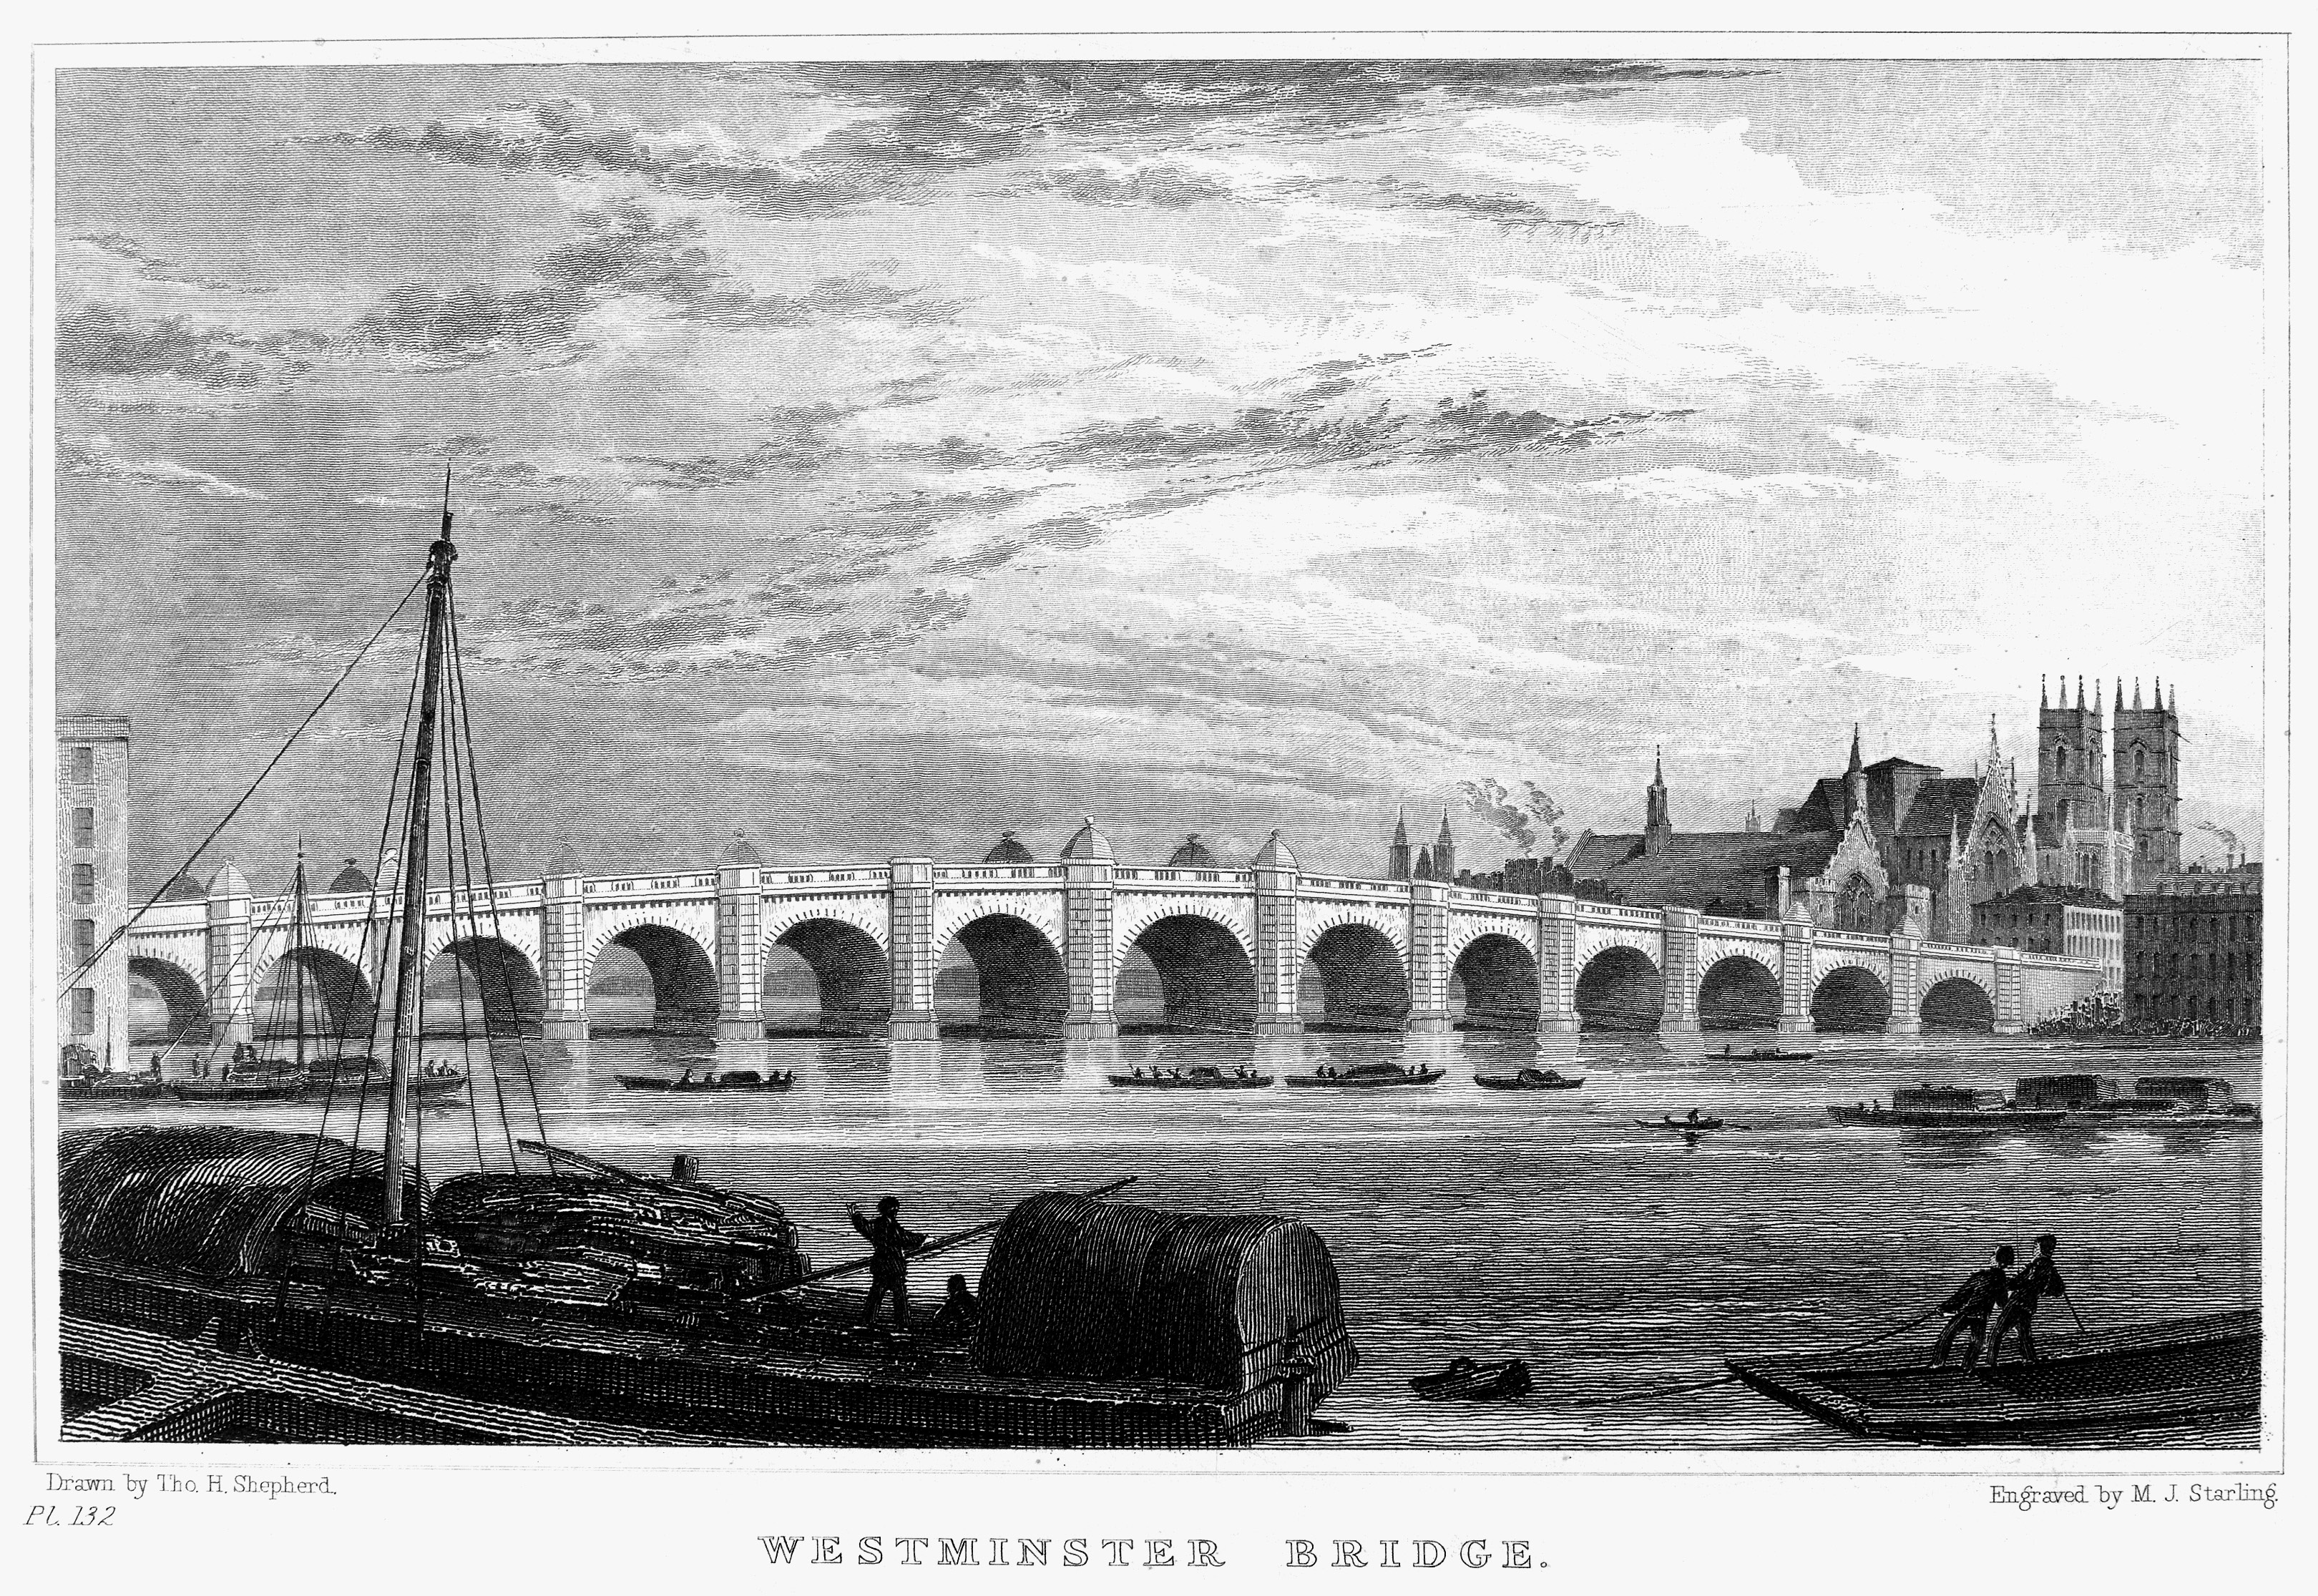 william wordsworth poem upon westminster bridge